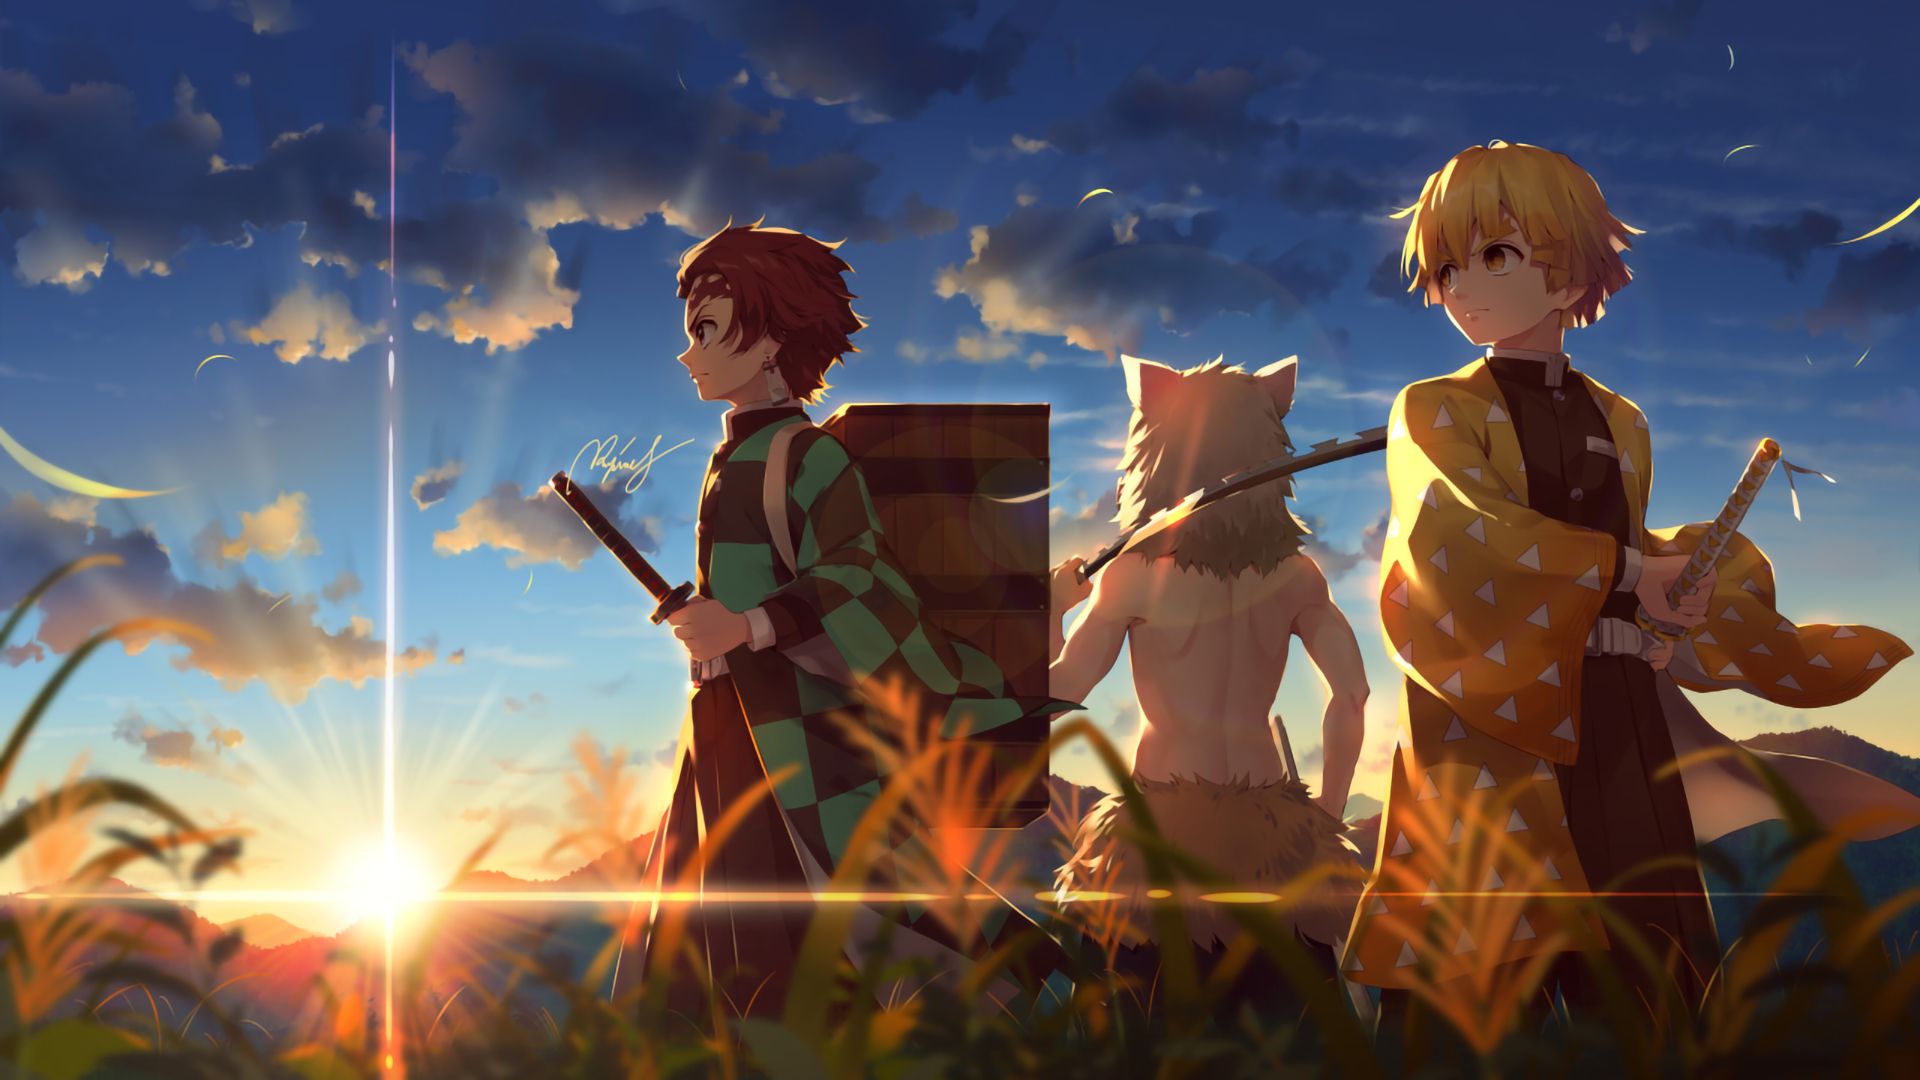 Inosuke Hashibira, Tanjirou Kamado and Zenitsu Agatsuma 2048x1152 Resolution Wallpaper, HD Anime 4K Wallpaper, Image, Photo and Background